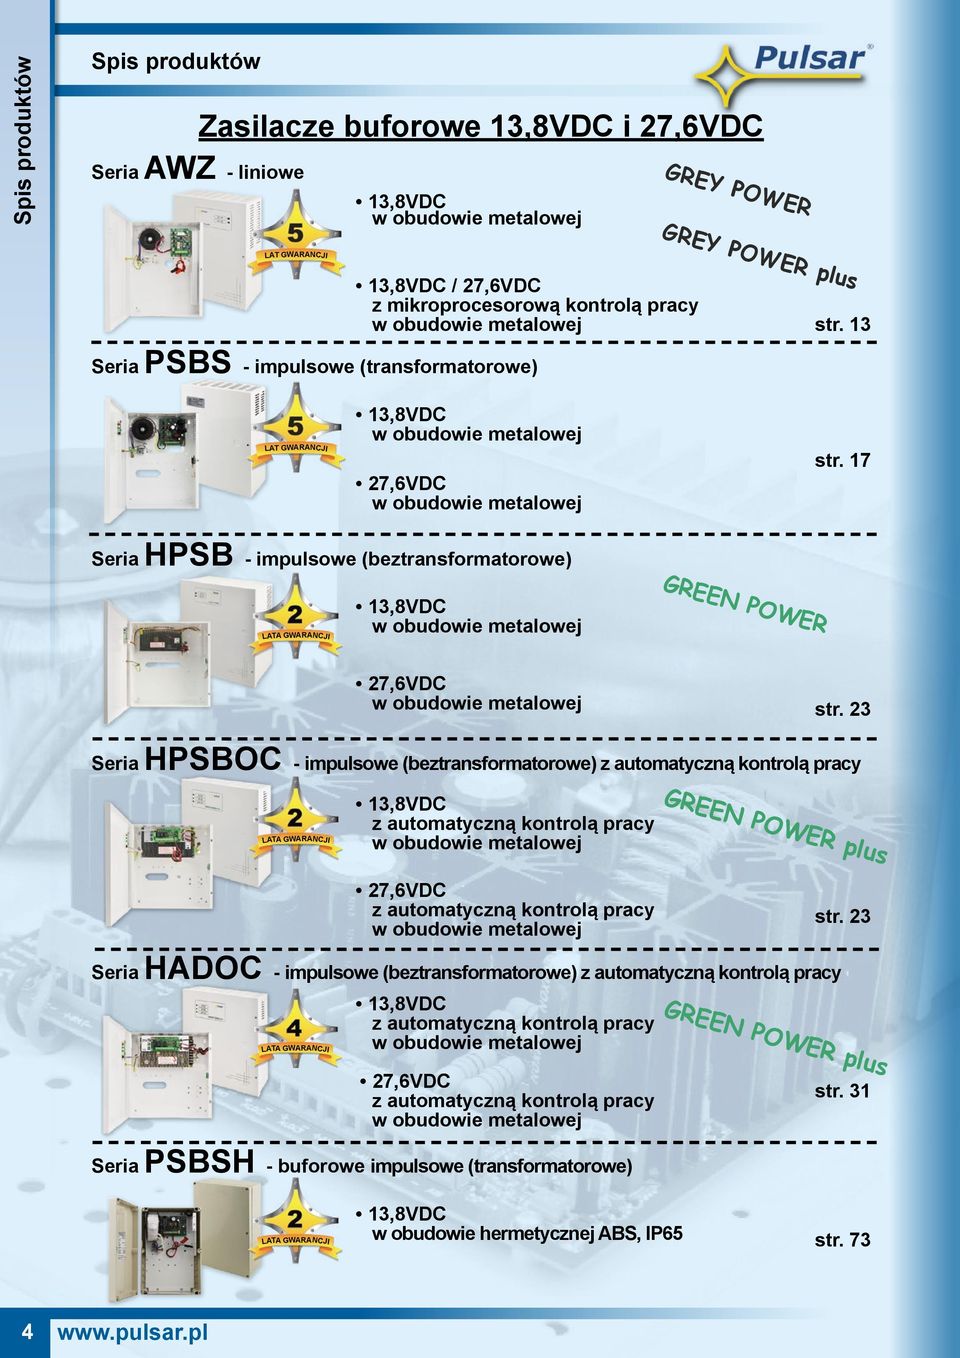 17 Seria HPSB - impulsowe (beztransformatorowe) 13,8VDC w obudowie metalowej 27,6VDC w obudowie metalowej str.